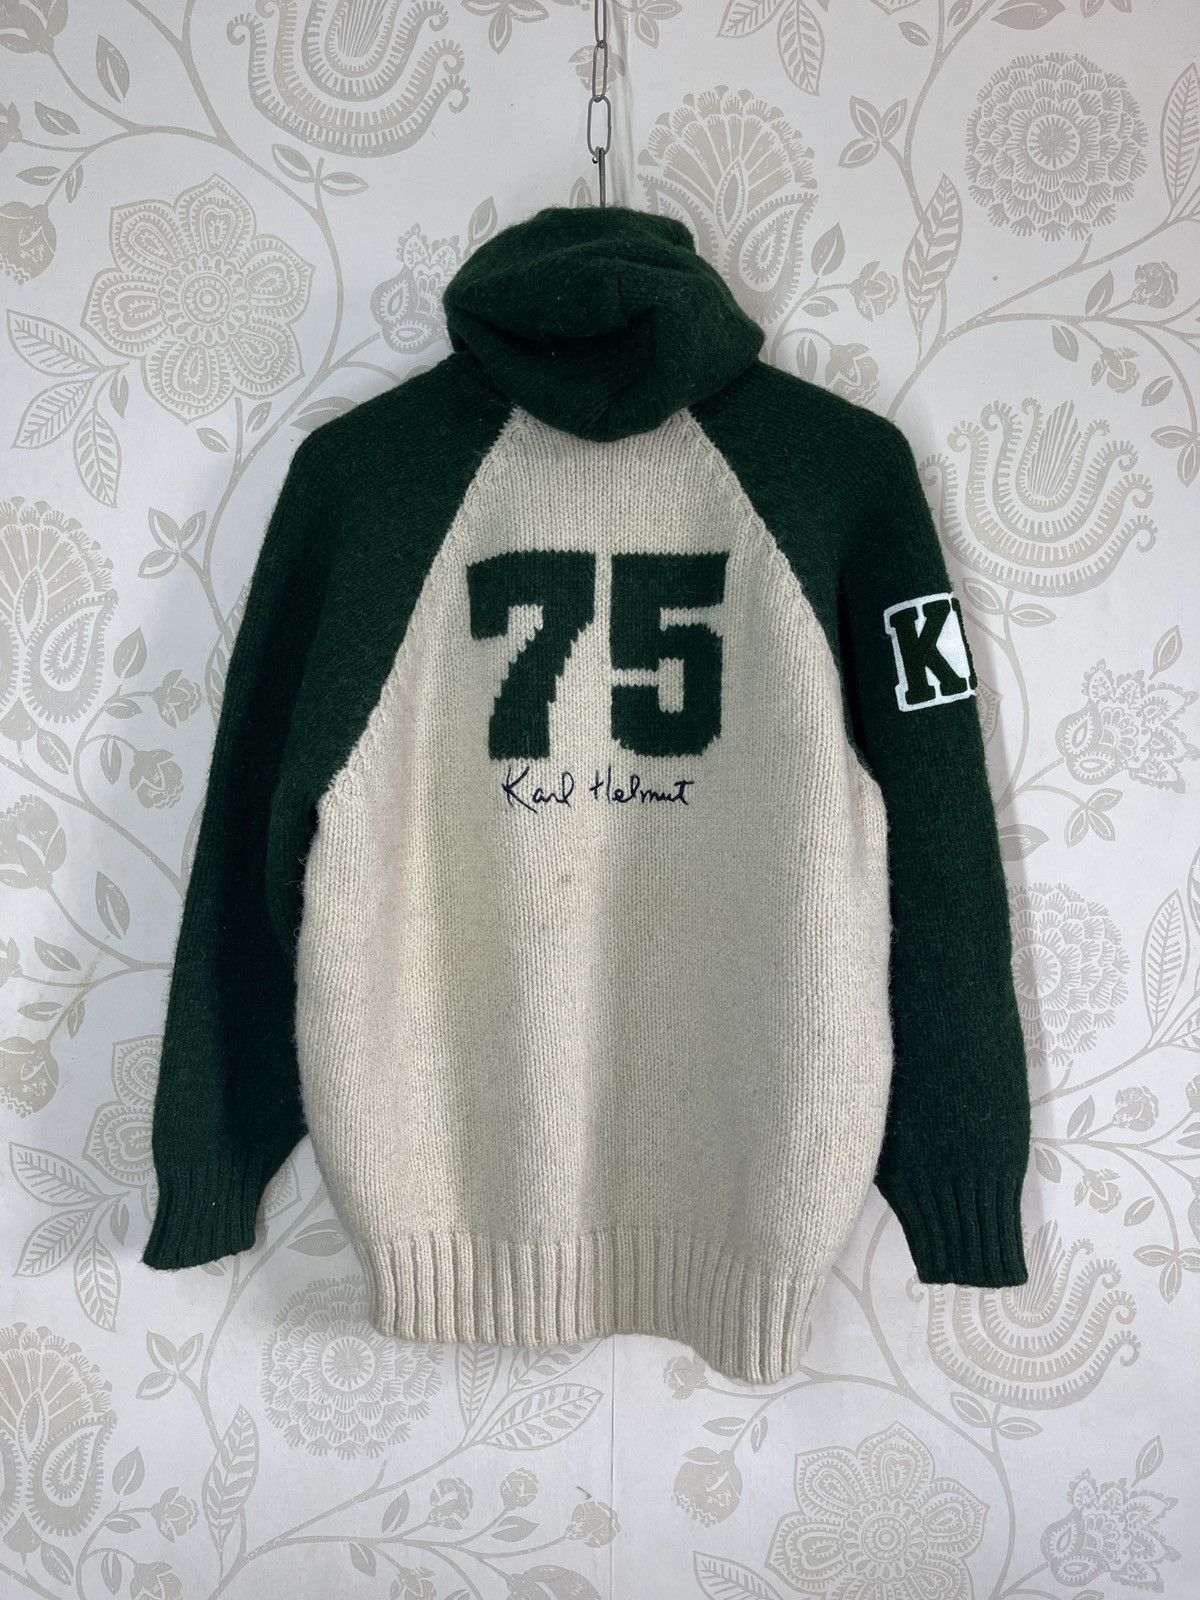 Grails Karl Helmut MLB Sweater Knitwear Vintage 1980s - 23